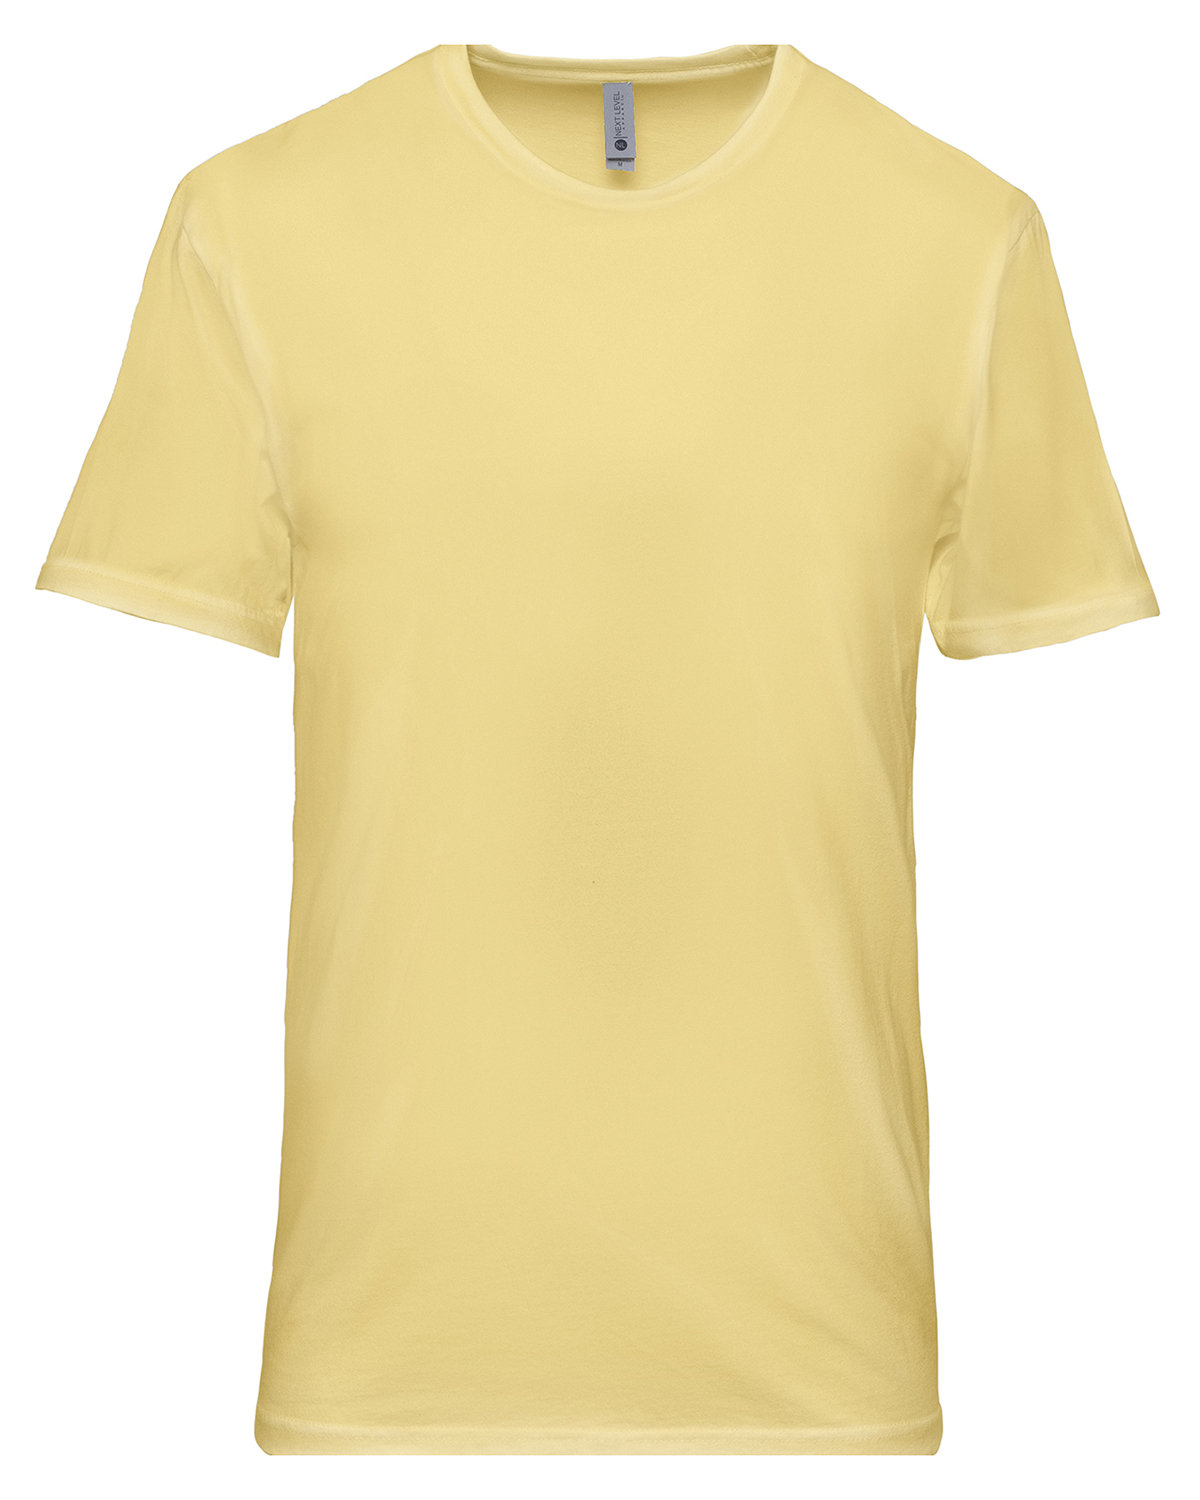 Next Level Apparel 3600SW - Unisex Soft Wash T-Shirt